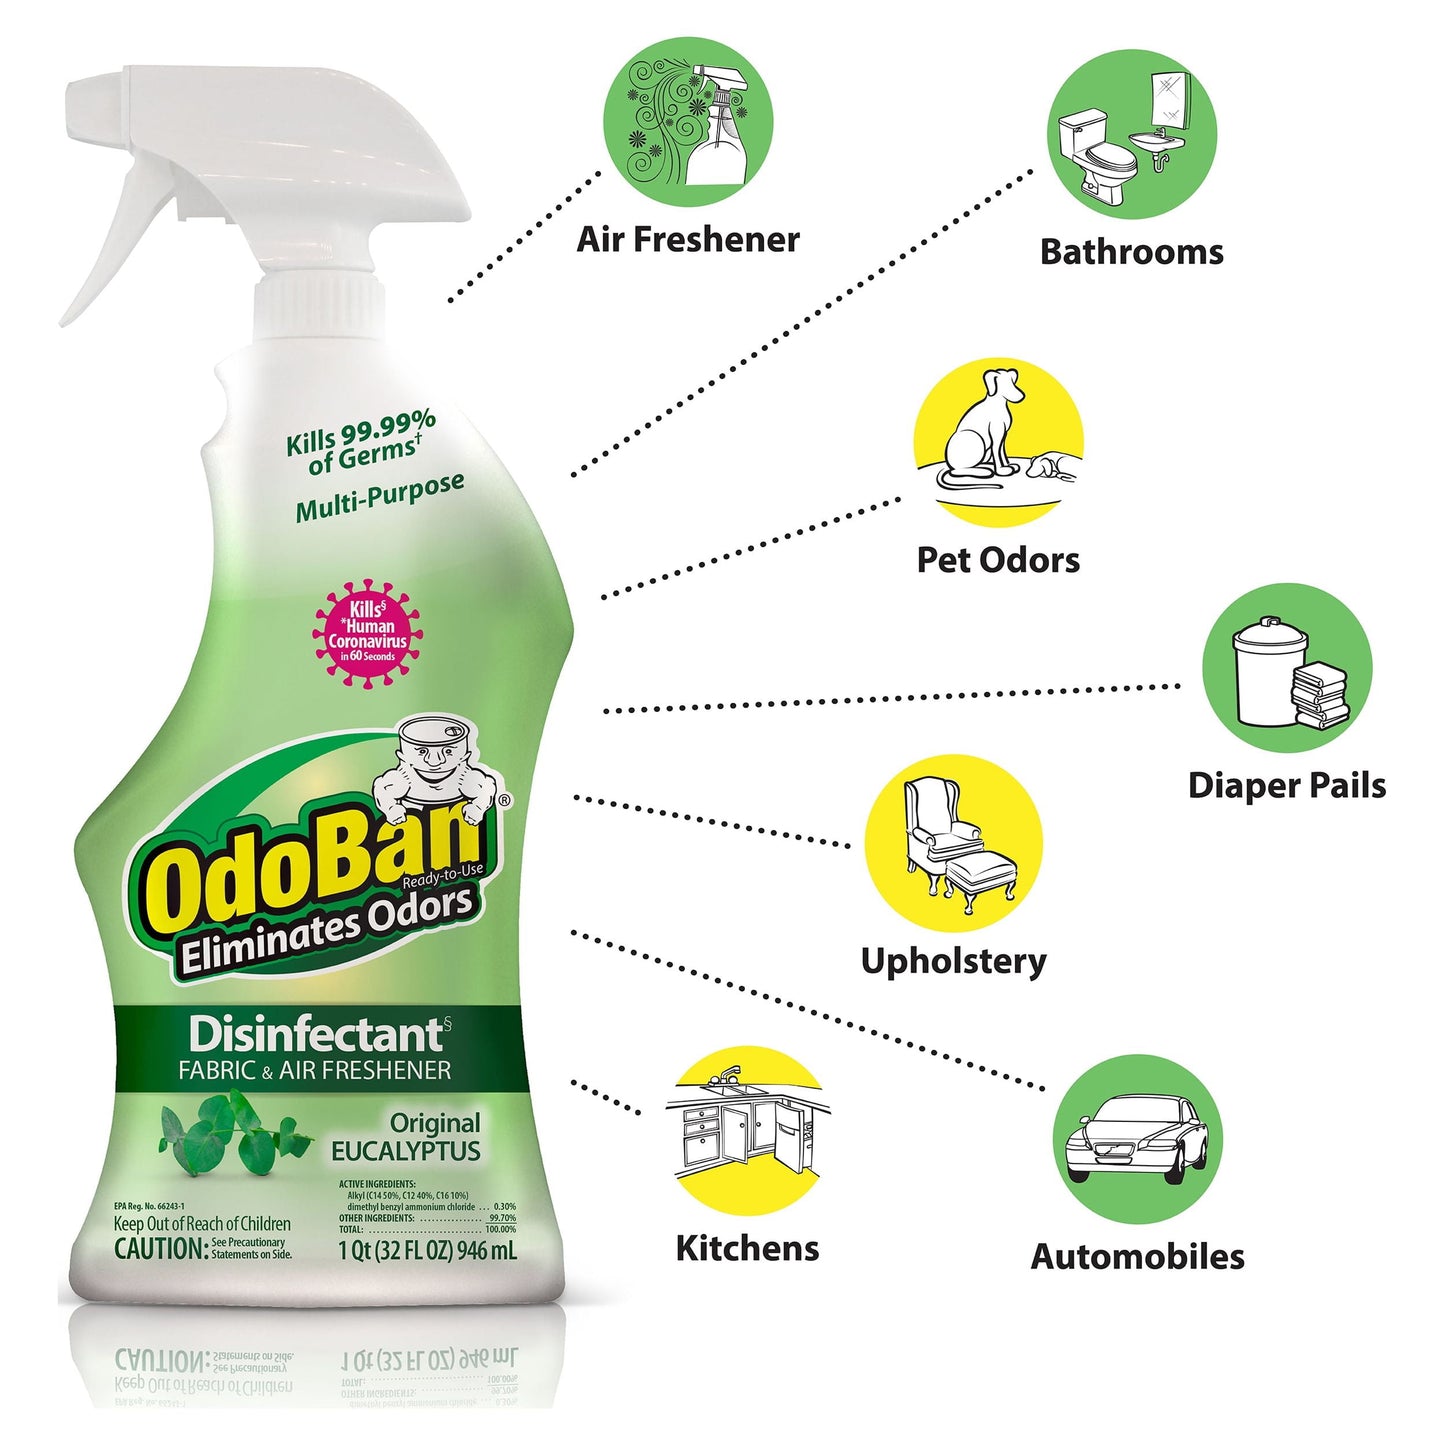 OdoBan Original Eucalyptus Scent Disinfectant Fabric & Air Freshener, 32 fl oz